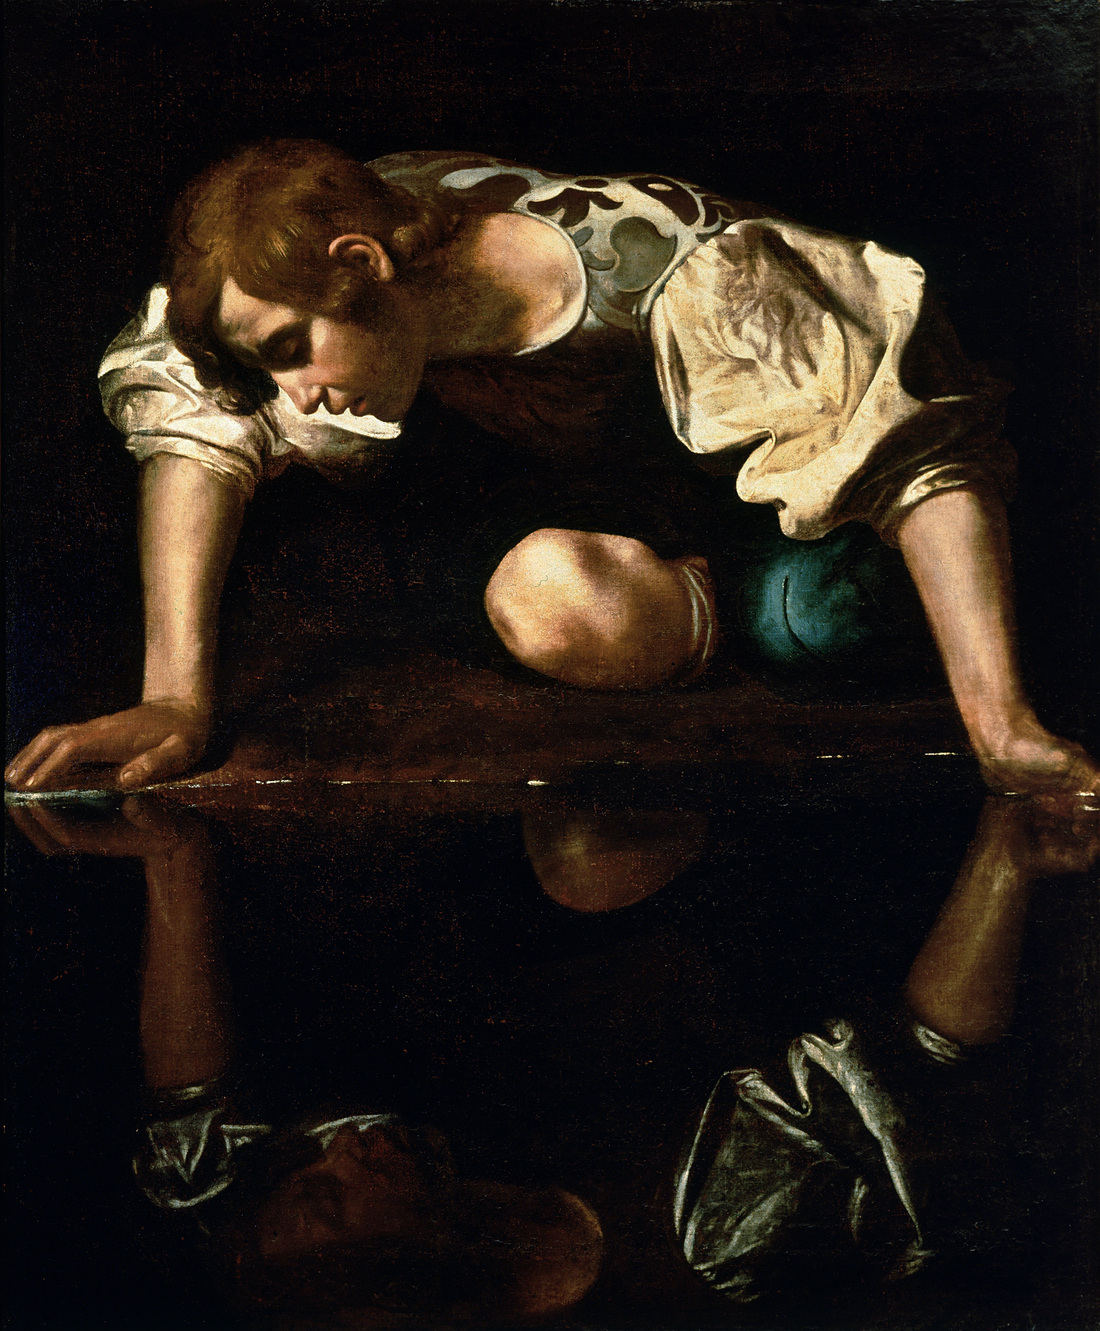 Narcissus, by Caravaggio